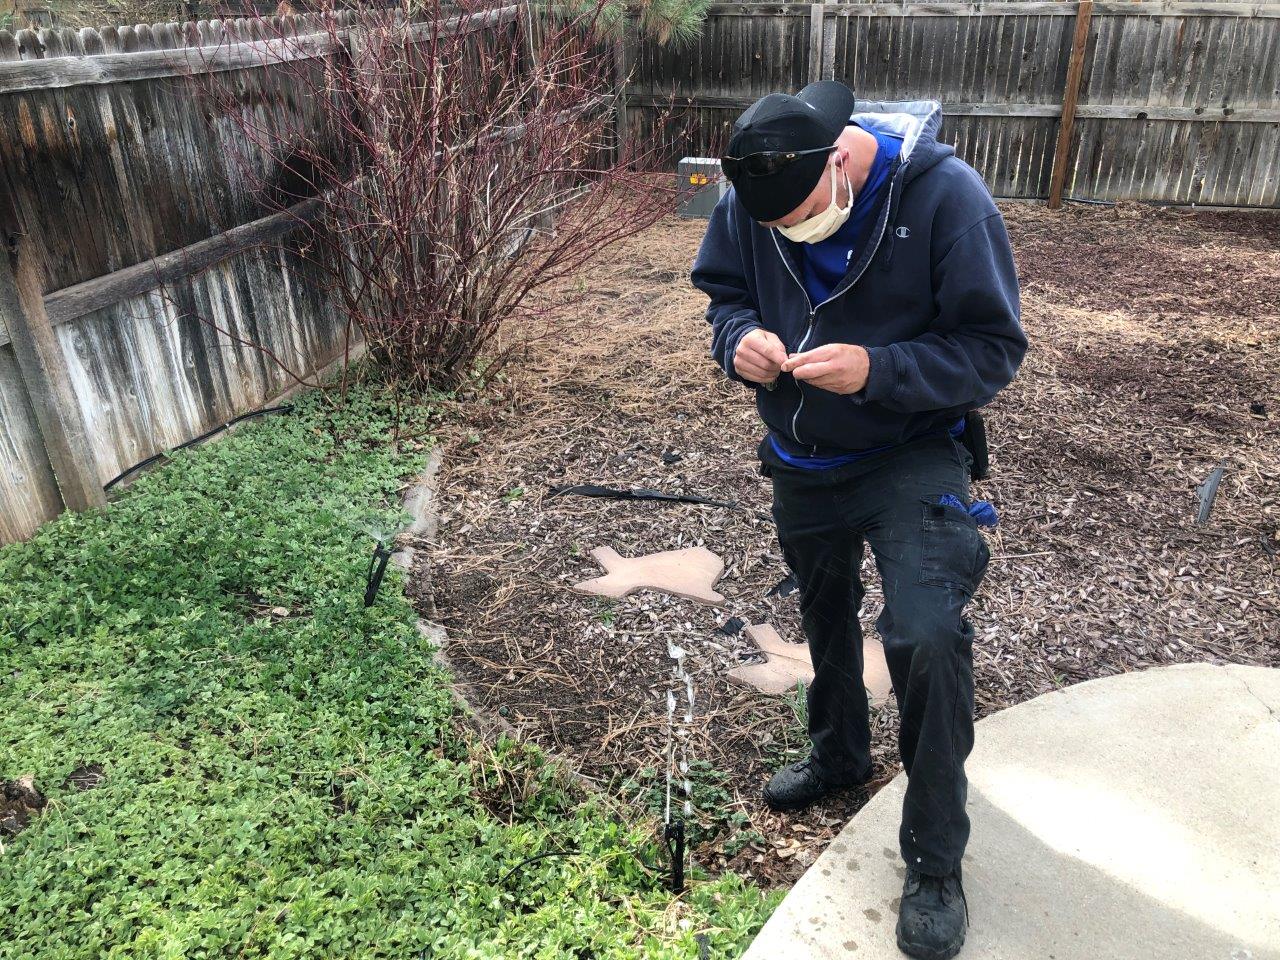 A sprinkler tech dons a mask to assist a homeowner with sprinkler activation in southeast Denver April 23.